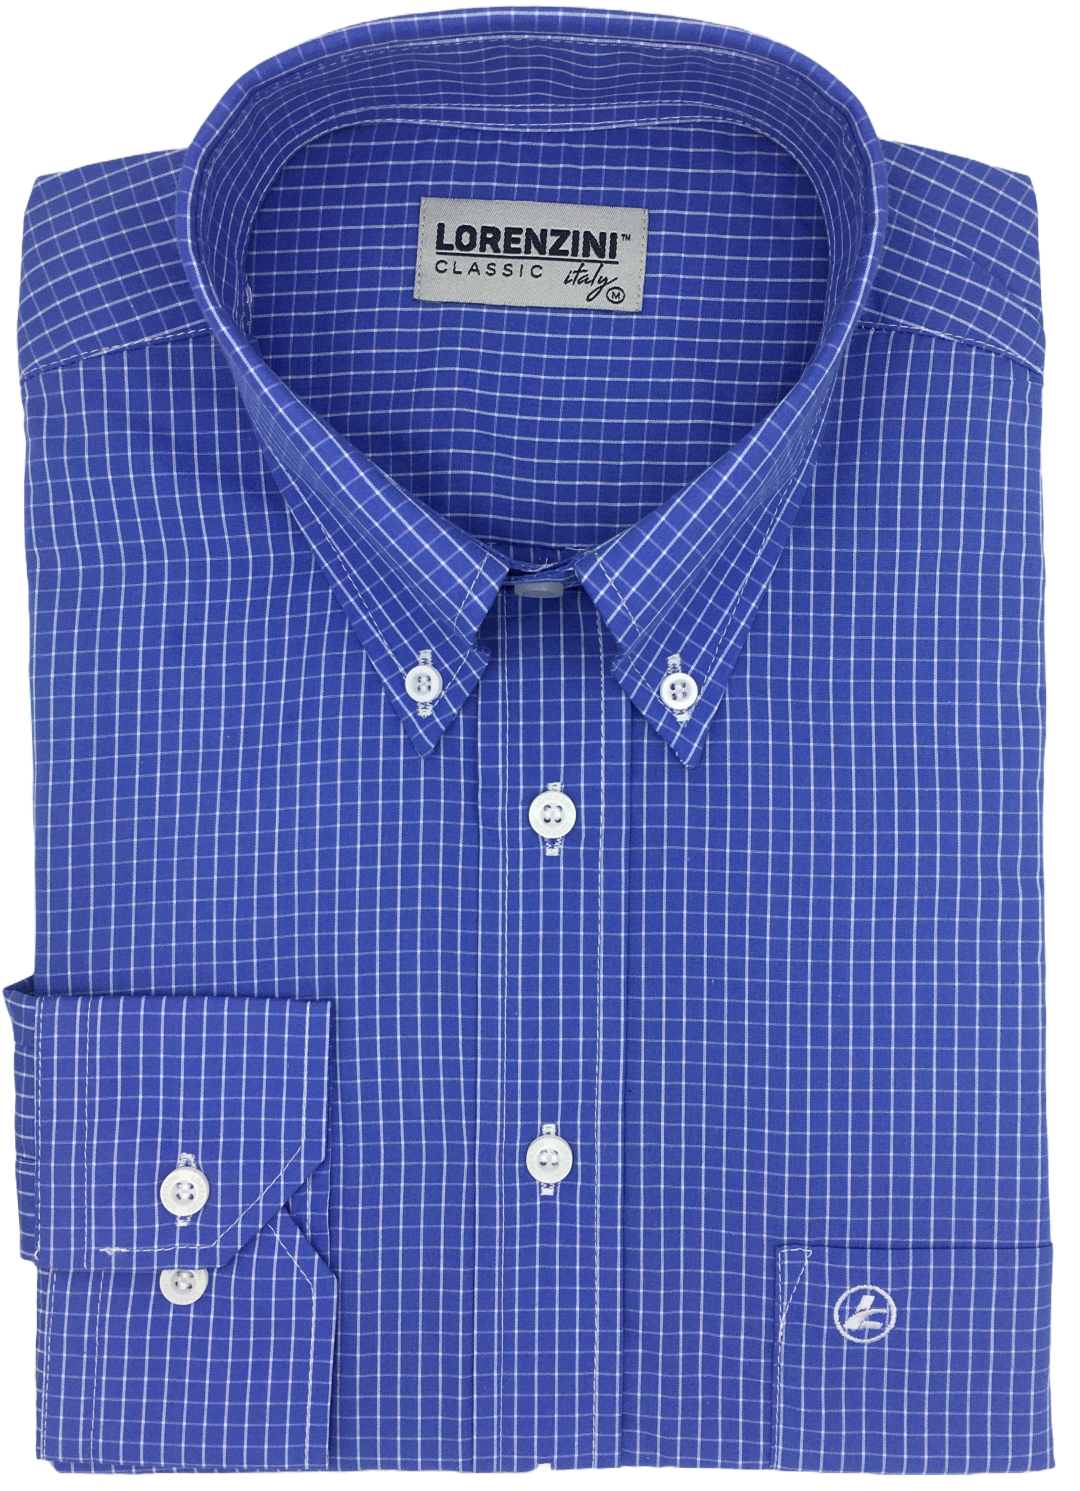 Lorenzini Classic Mist Royal Check Shirt